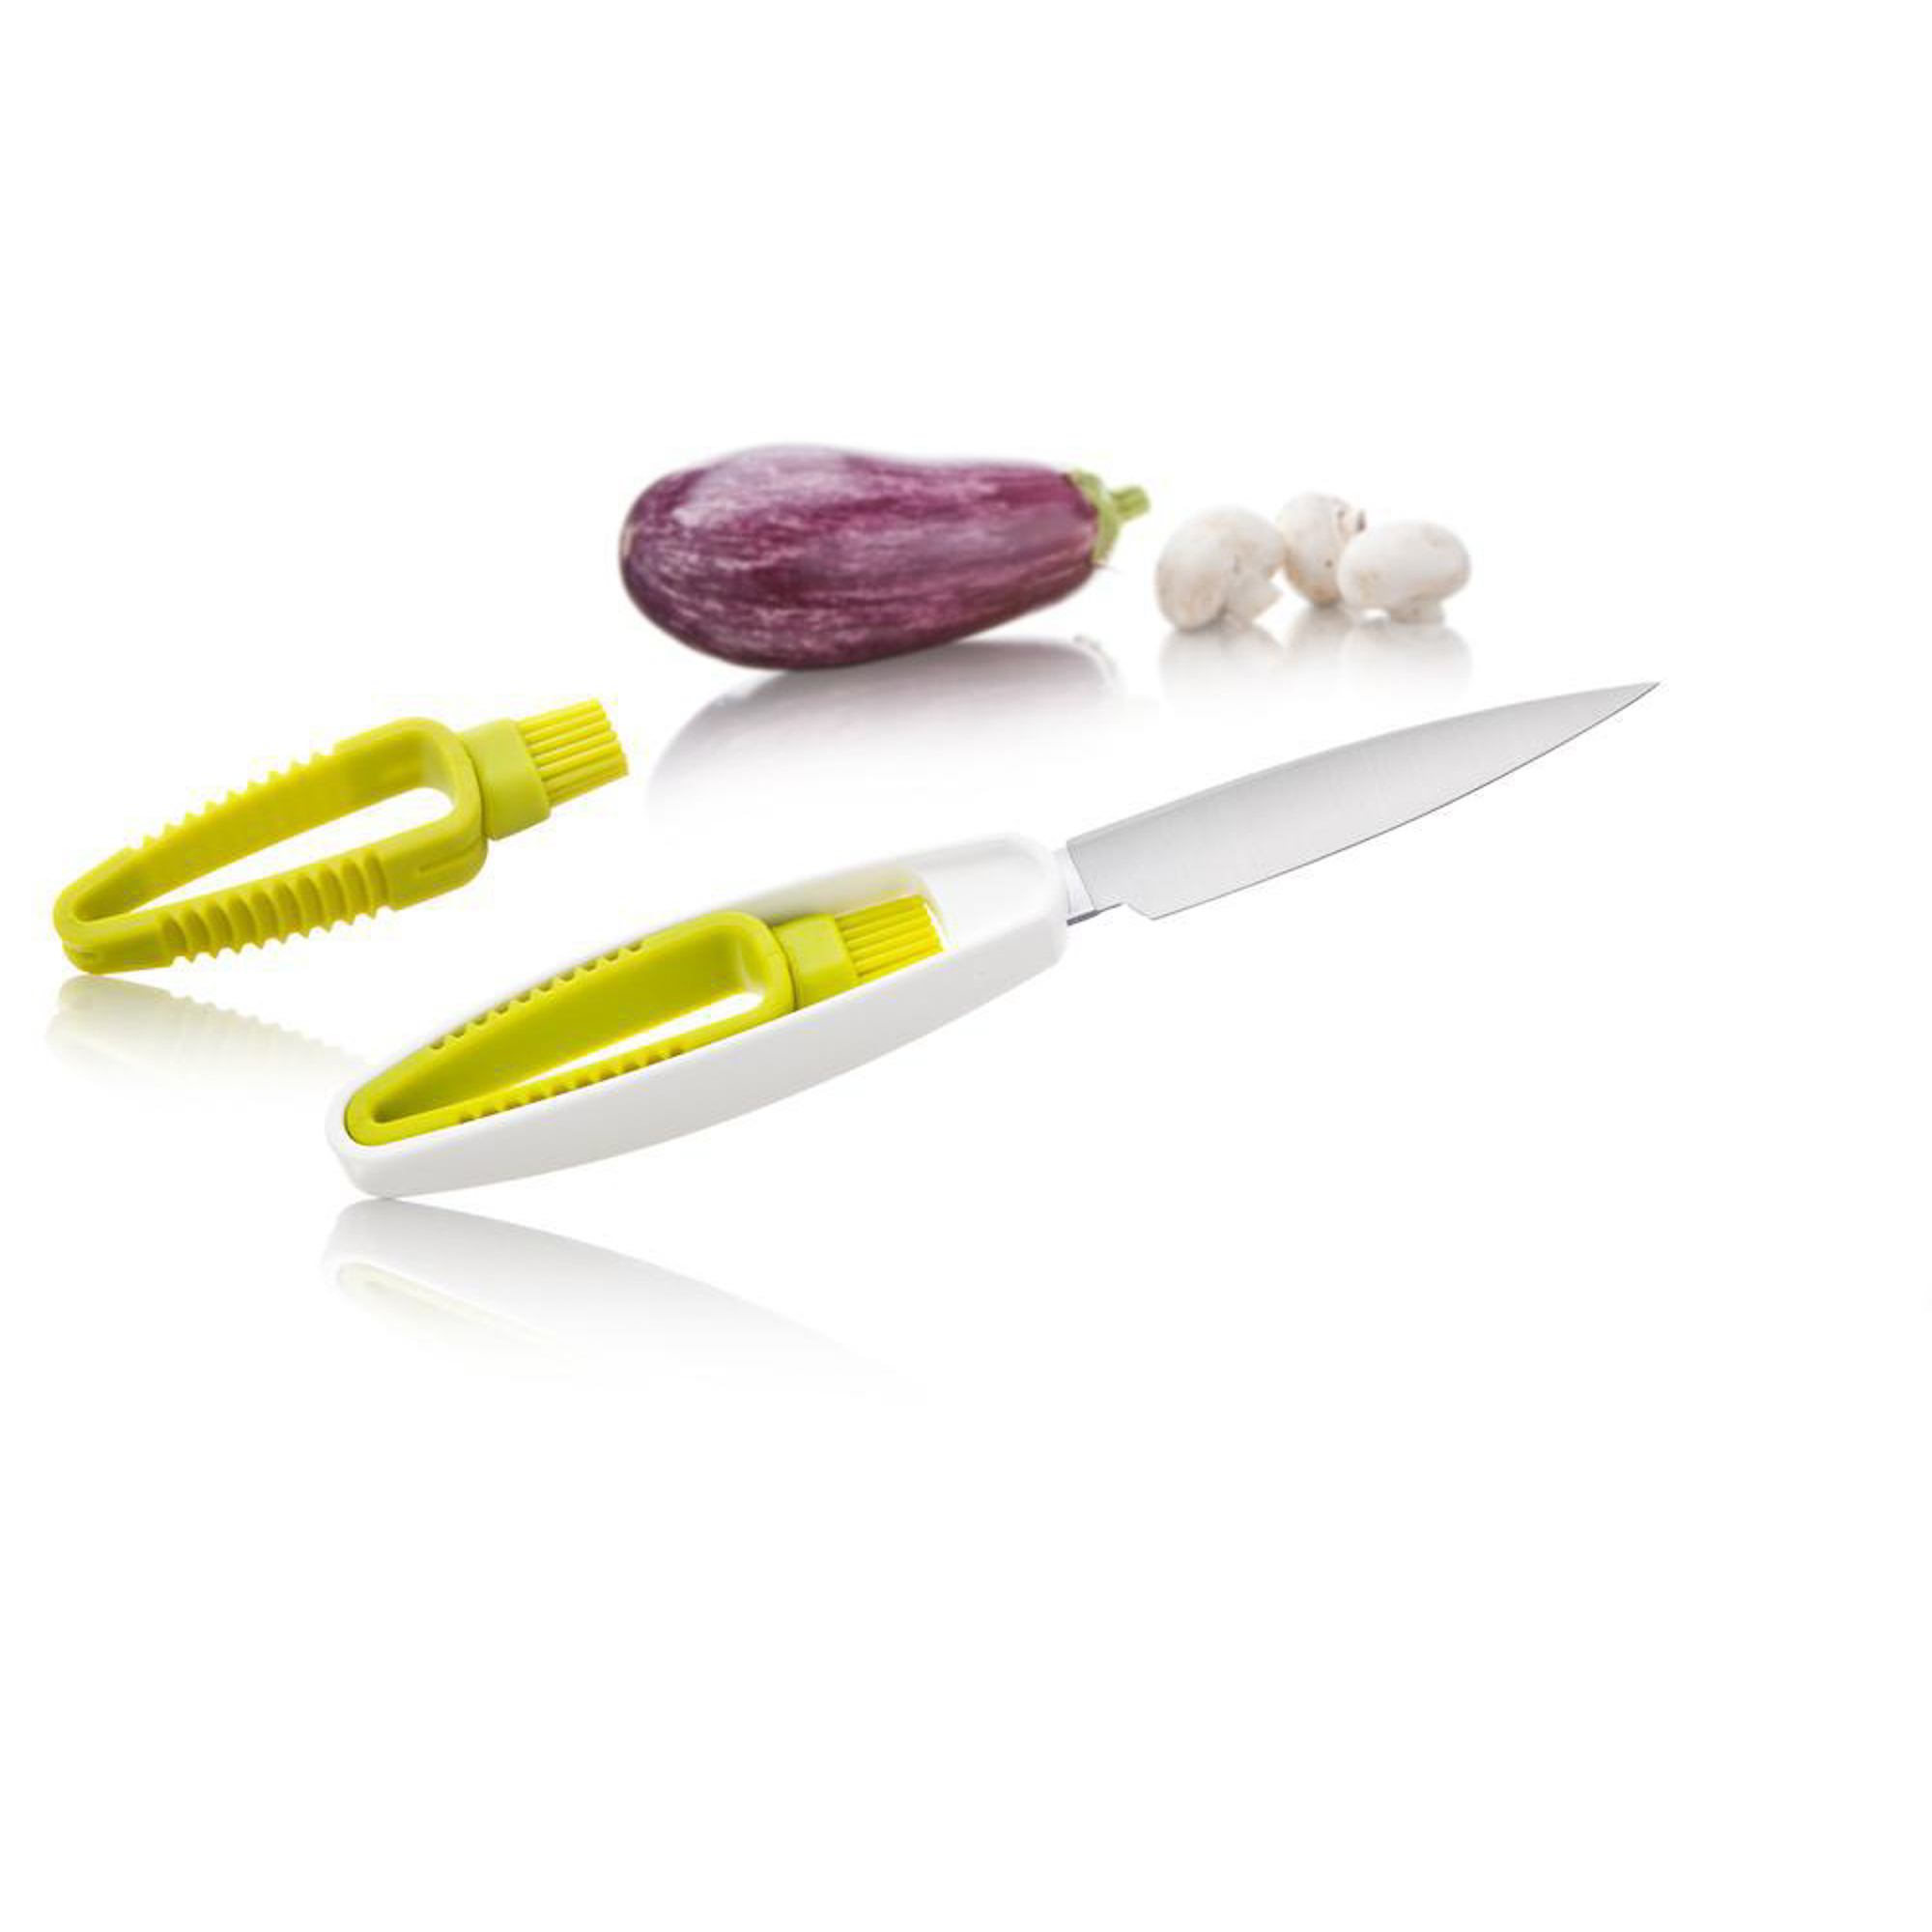 Нож для овощей со щеткой Tomorrow's kitchen нож кухонный для нарезки овощей и фруктов arcos clara 13 см